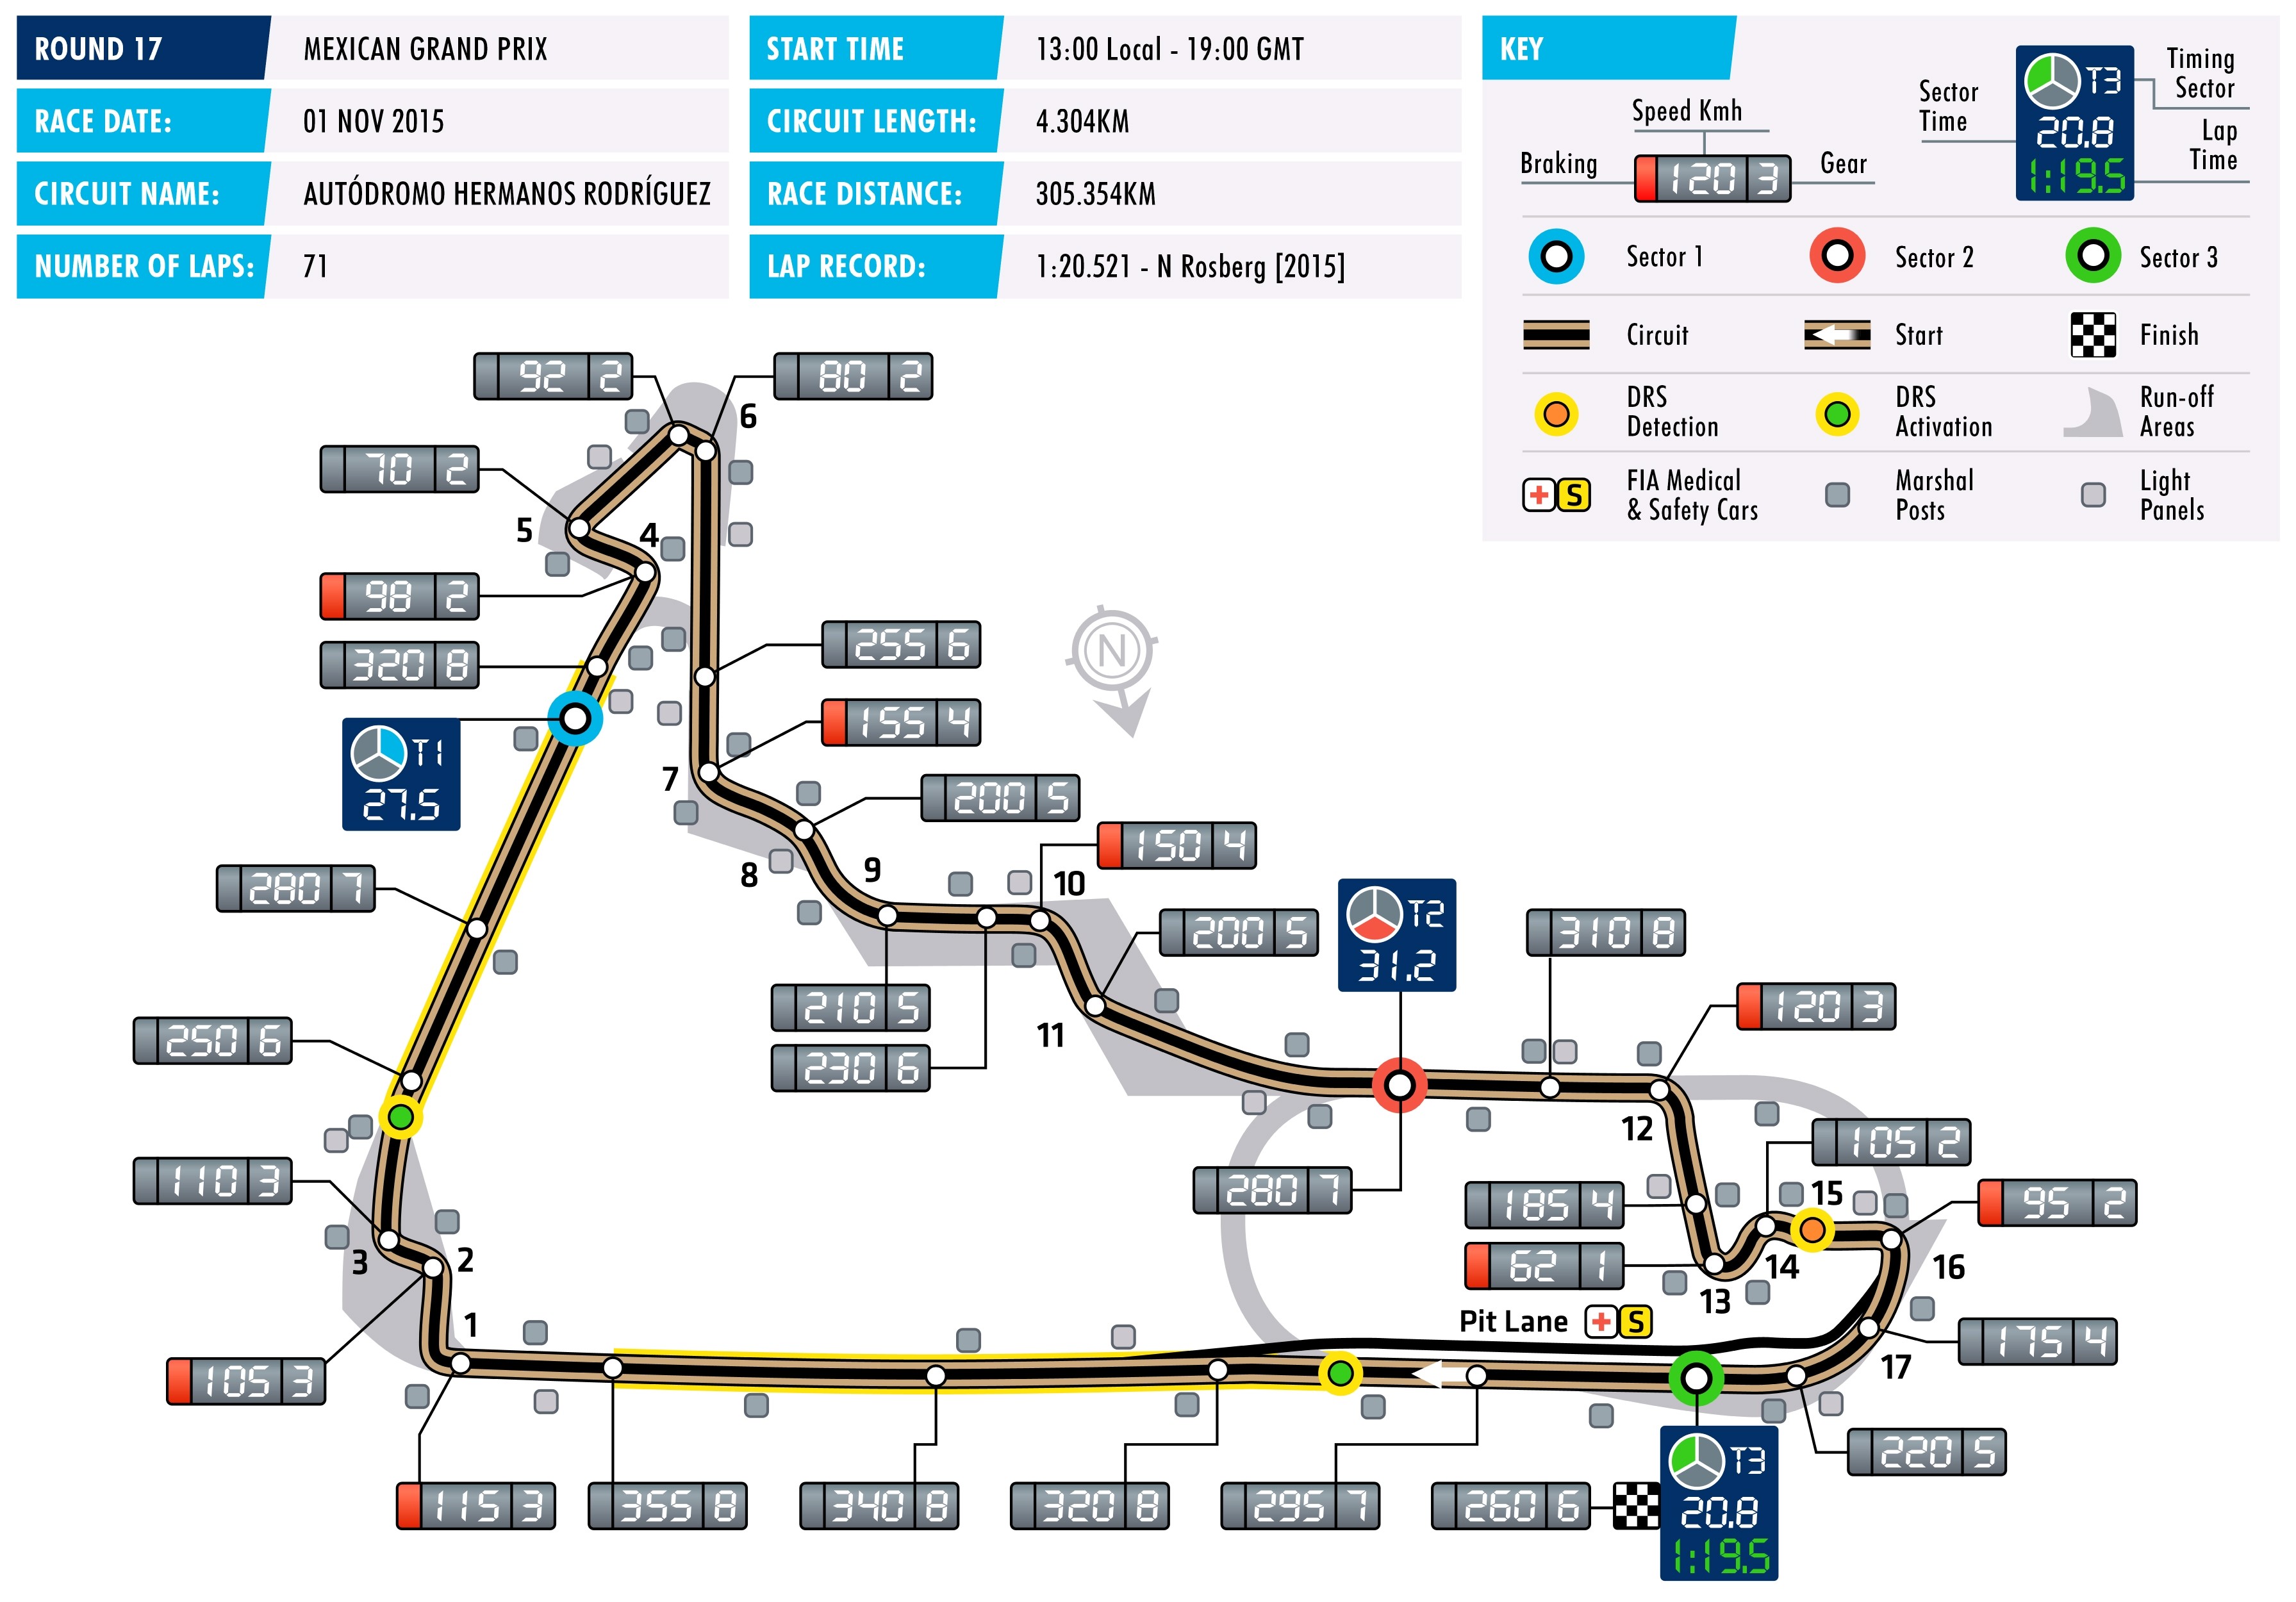 2015 Mexican Grand Prix - Circuit Map